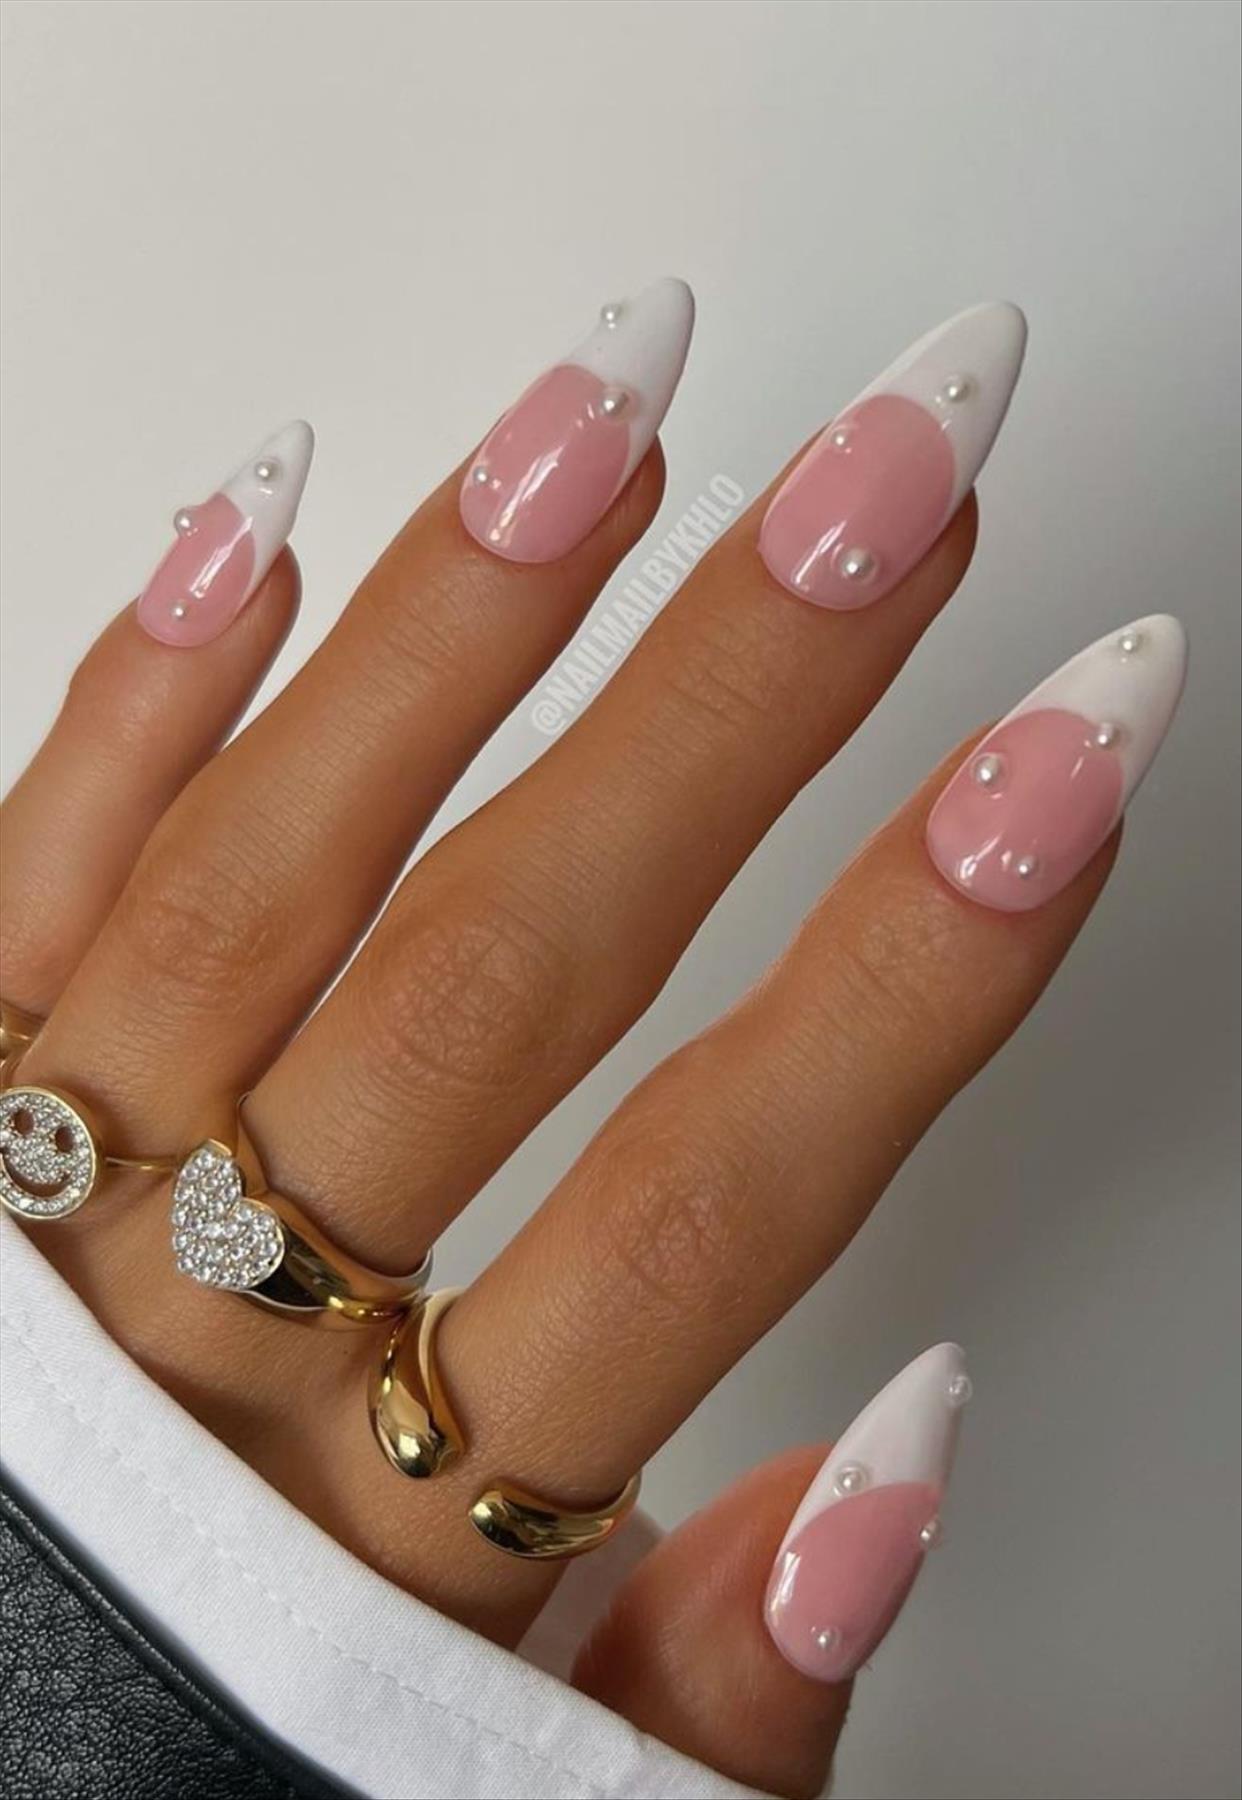 Elegant White Nails Design Perfect For Your Next Mani!